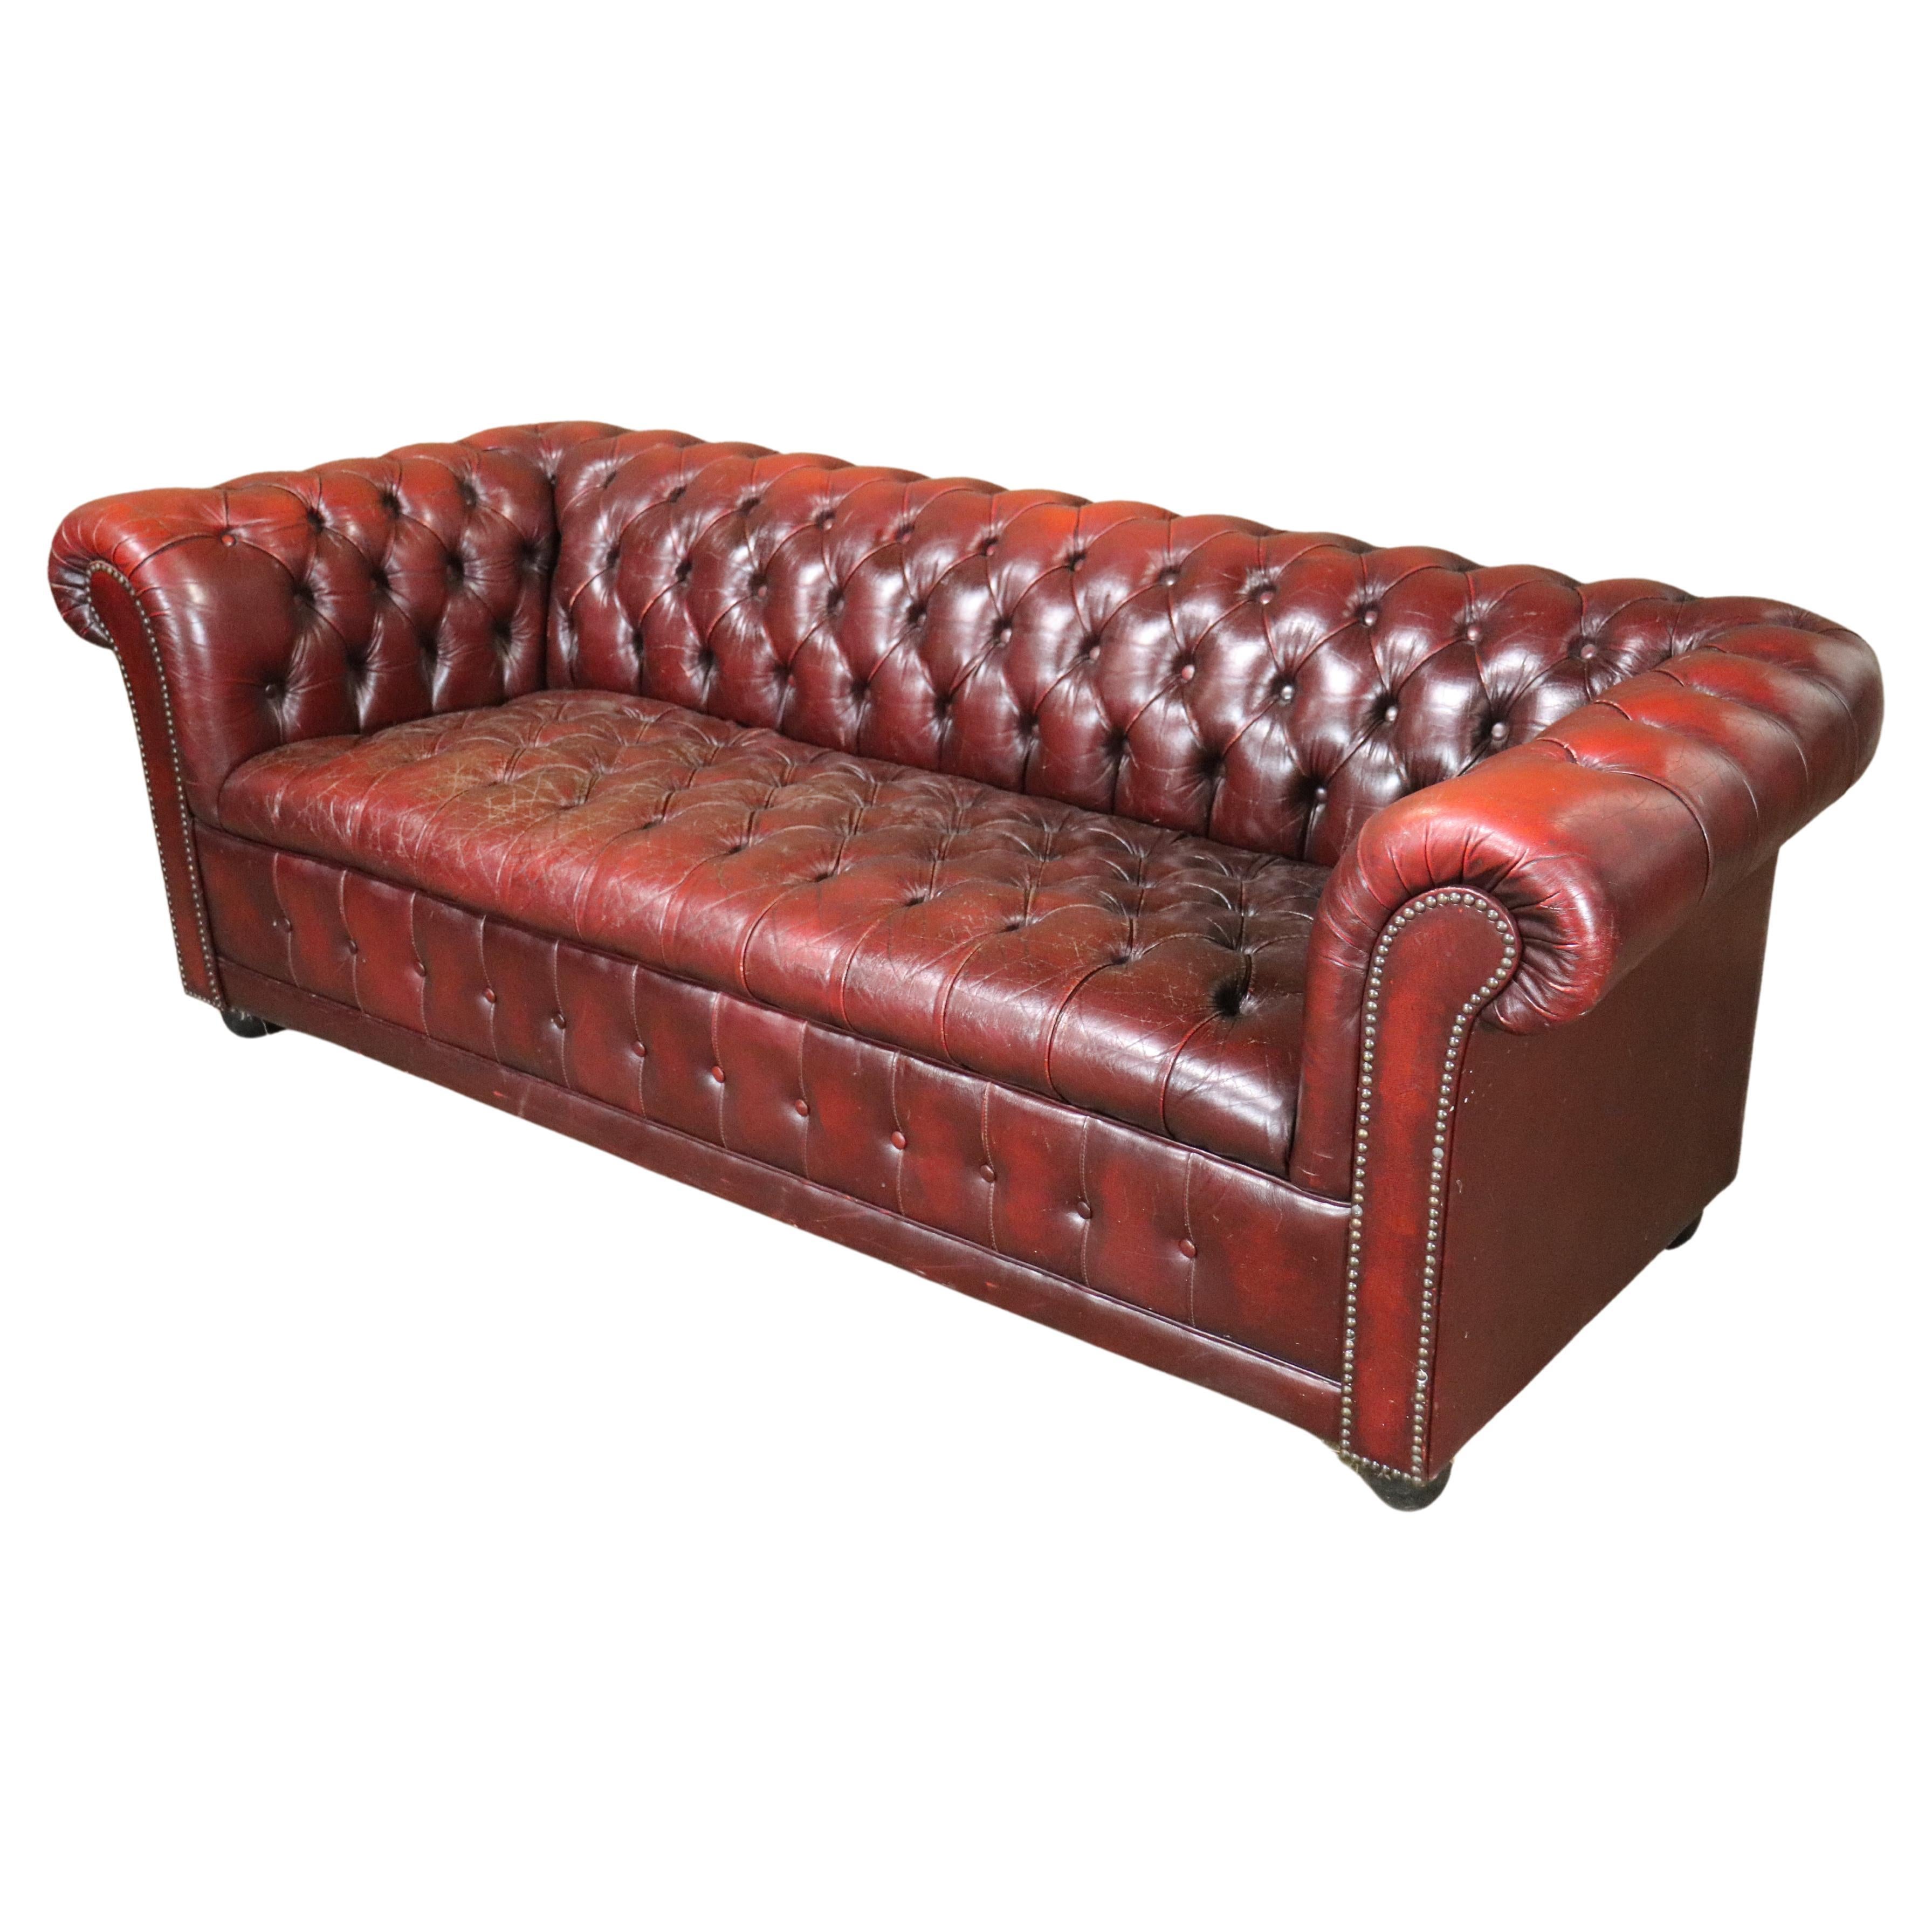 Burgundy Chesterfield Sofa For Sale